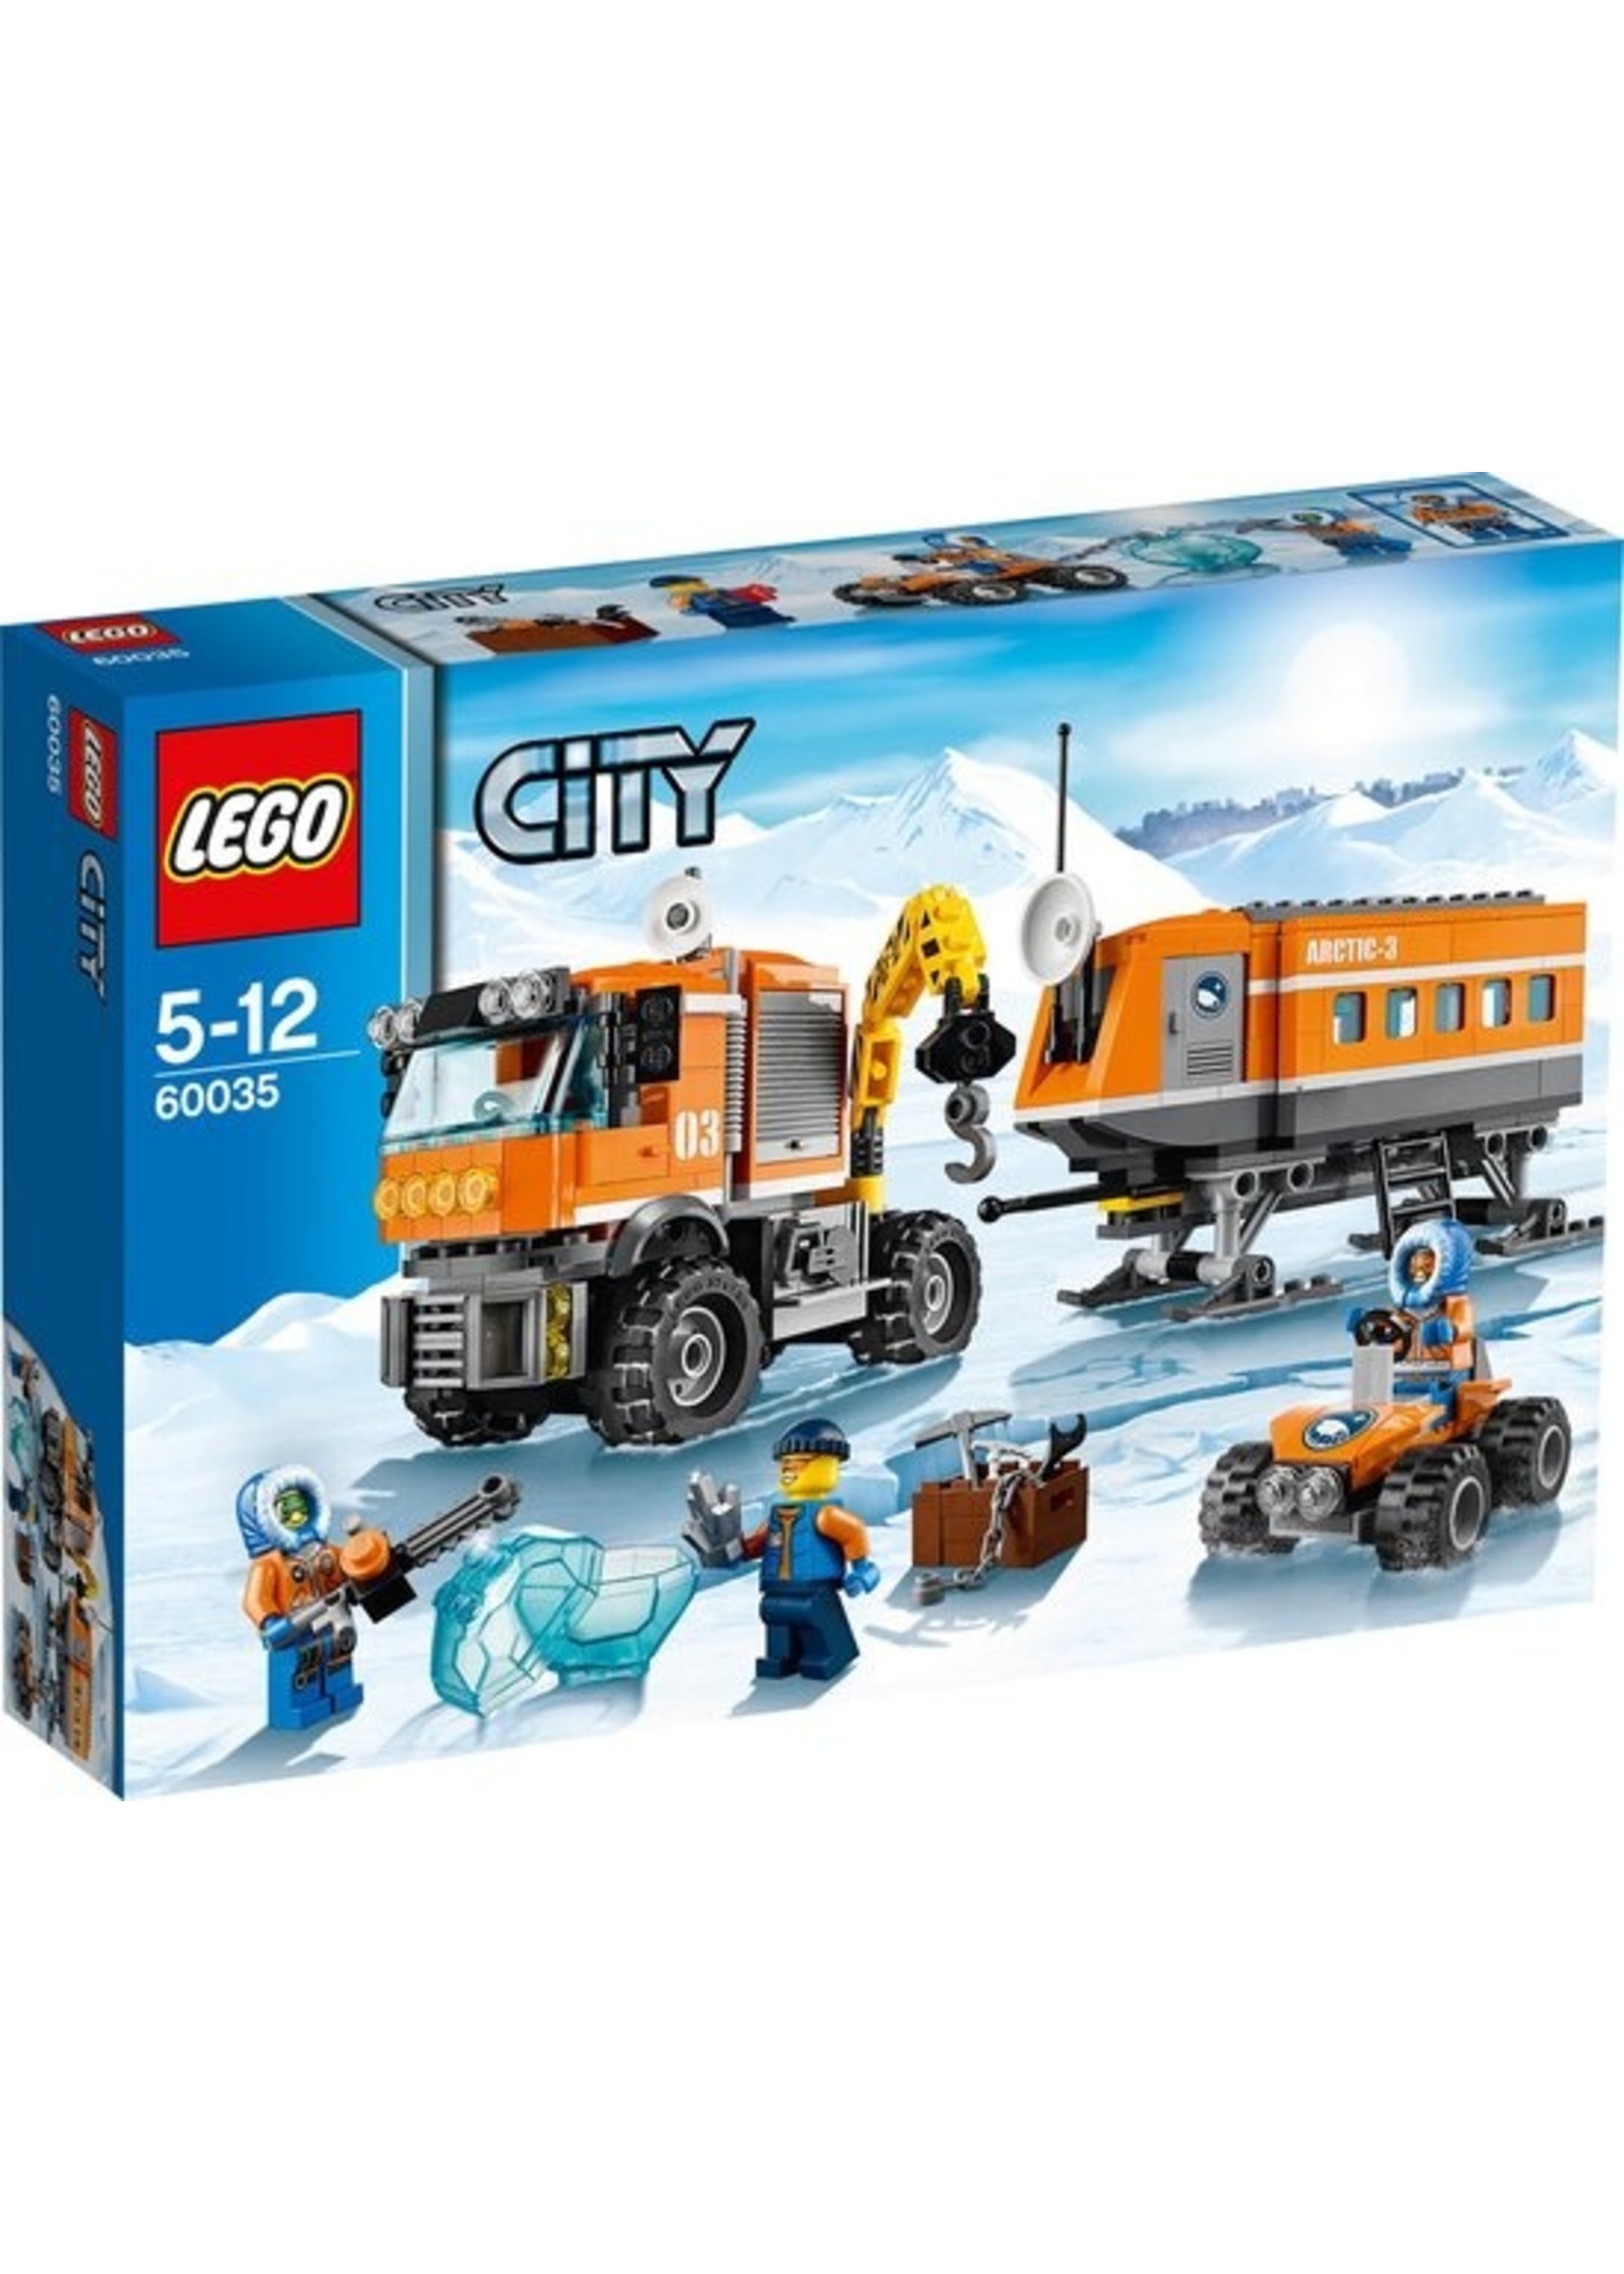 LEGO City Arctic Outpost - 60035